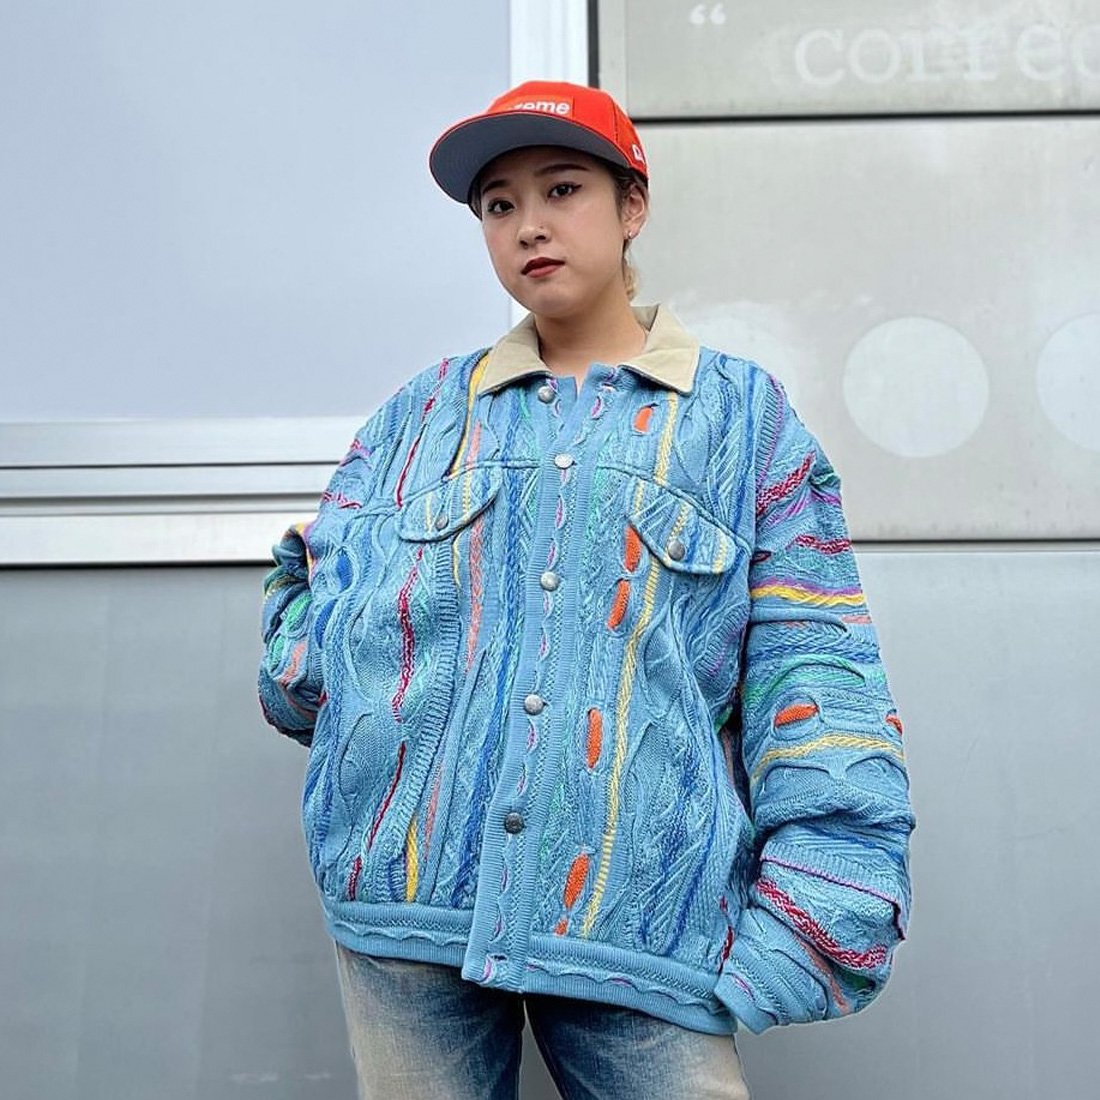 Supreme × COOGI Trucker Jacket ブルー Lサイズ